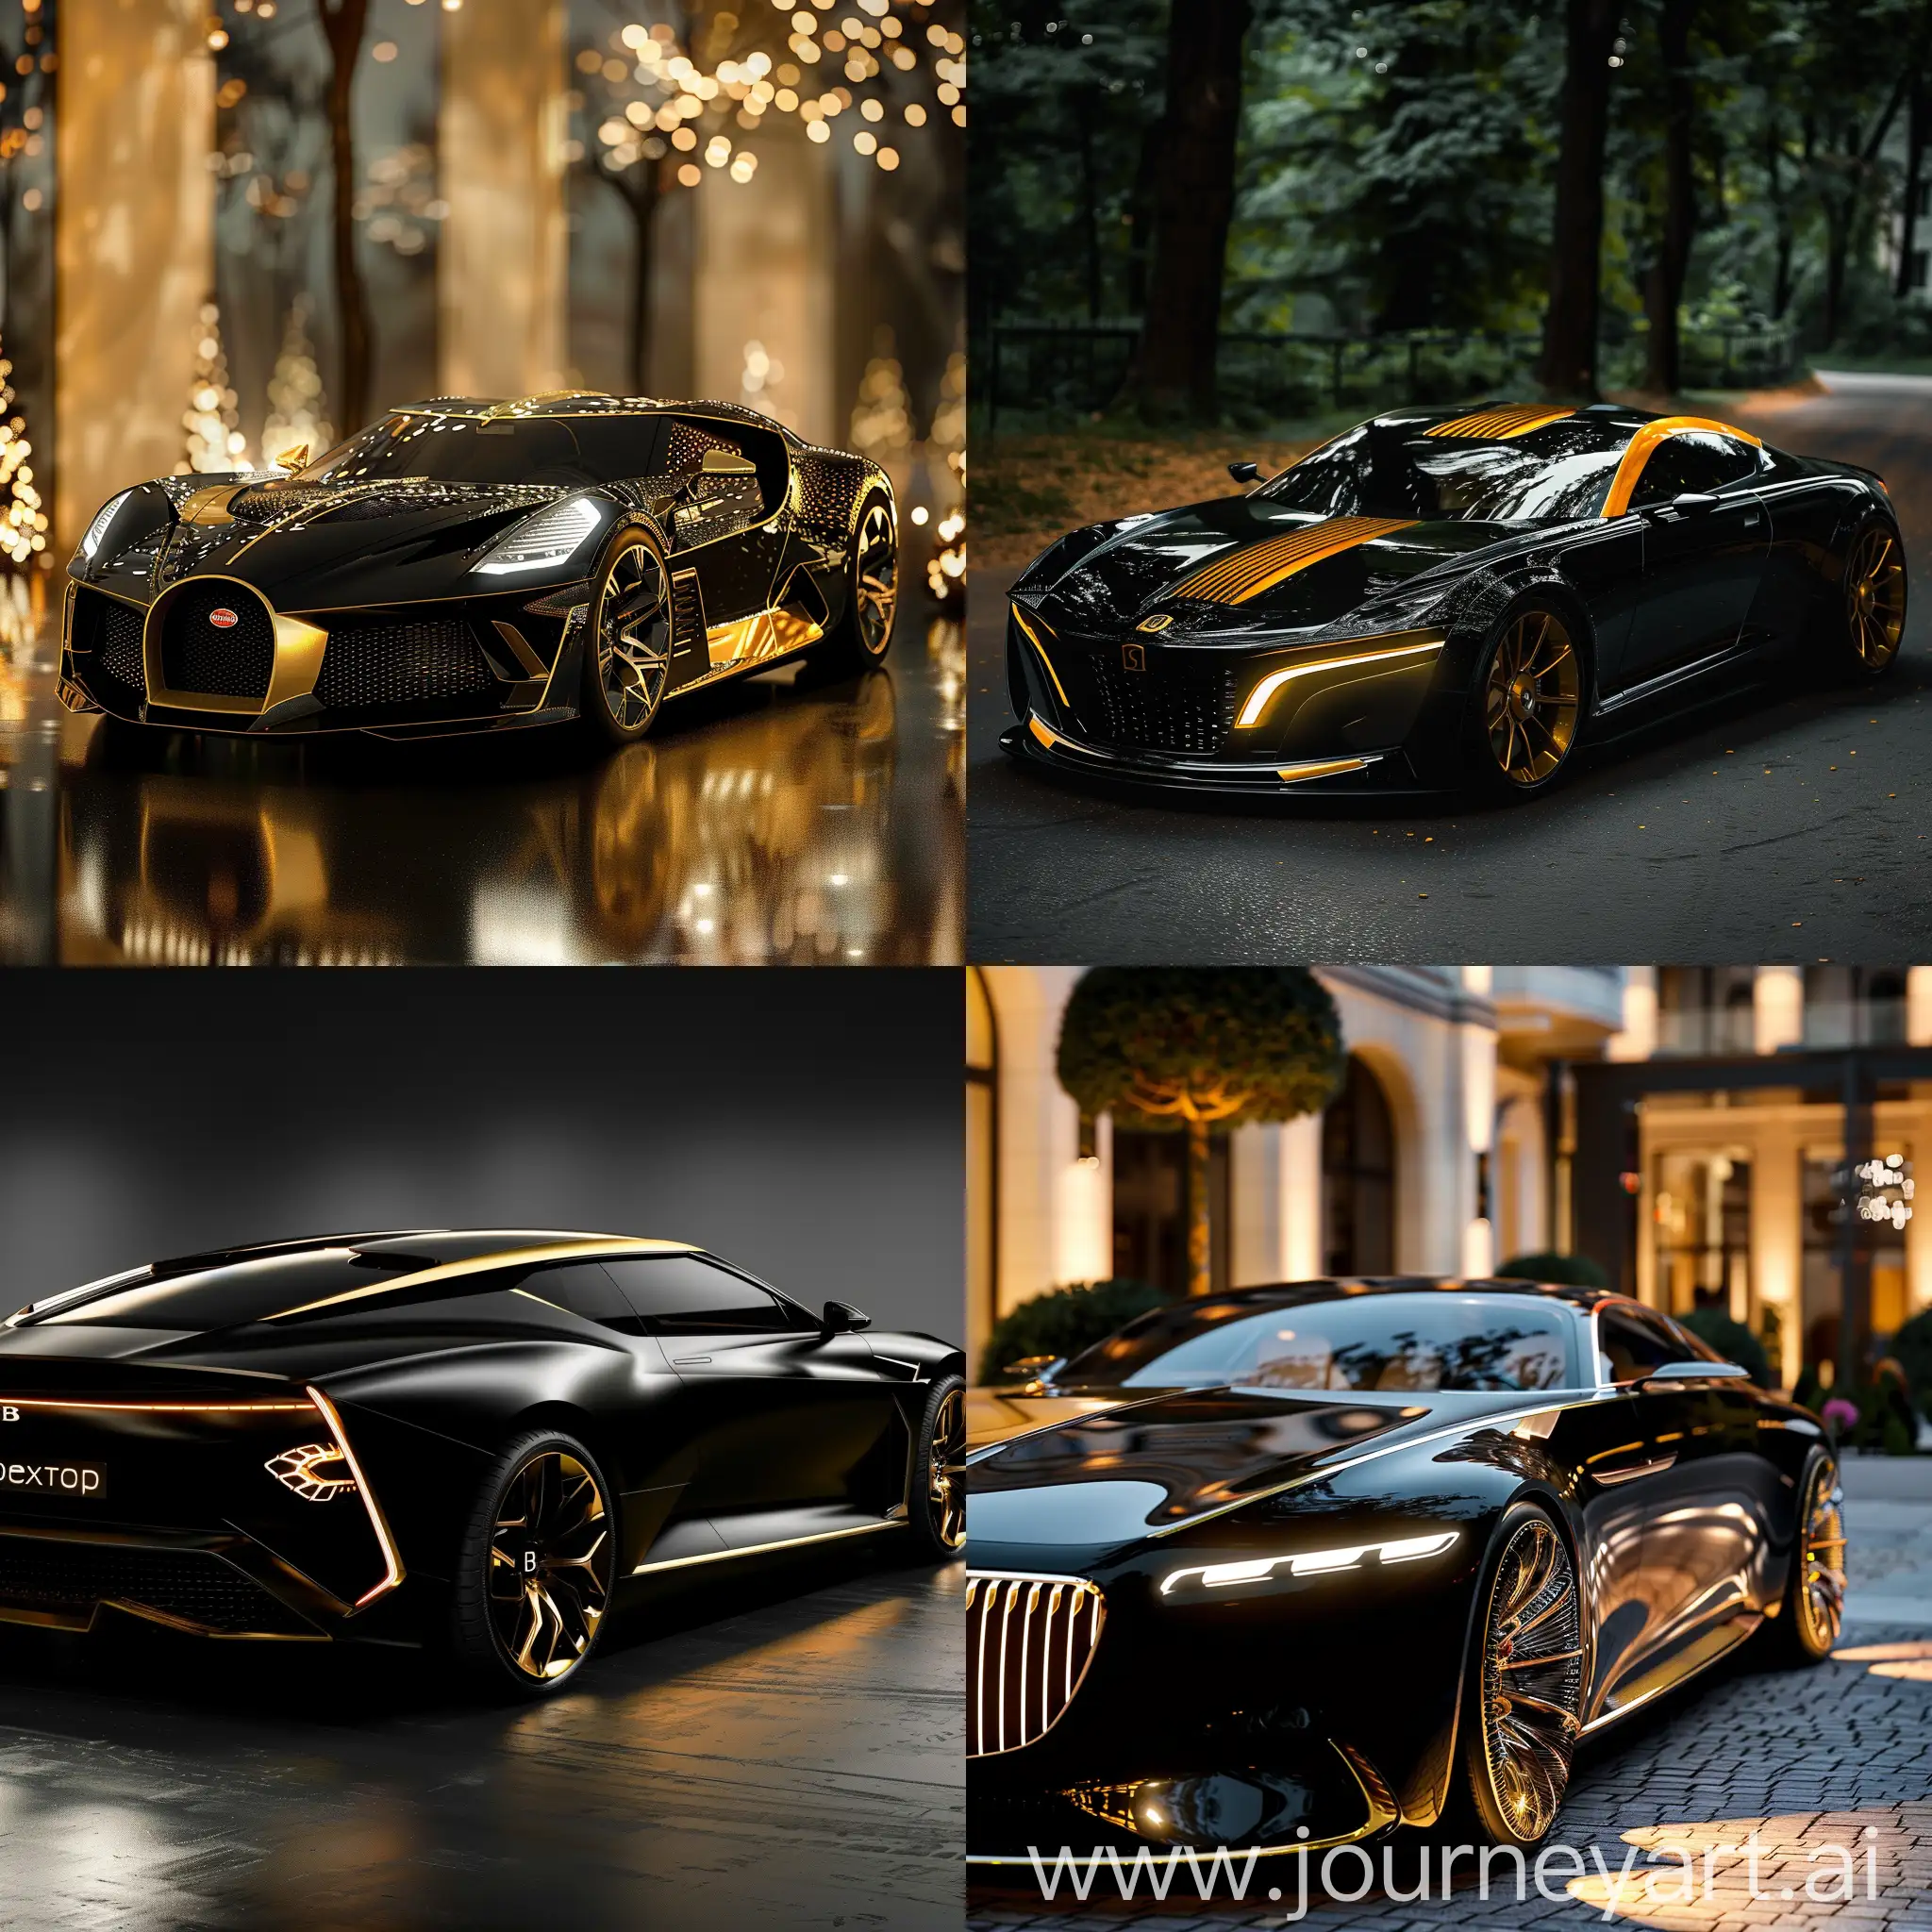 luxury car, black and golden color, Ultra HD, Dextop wallpaper